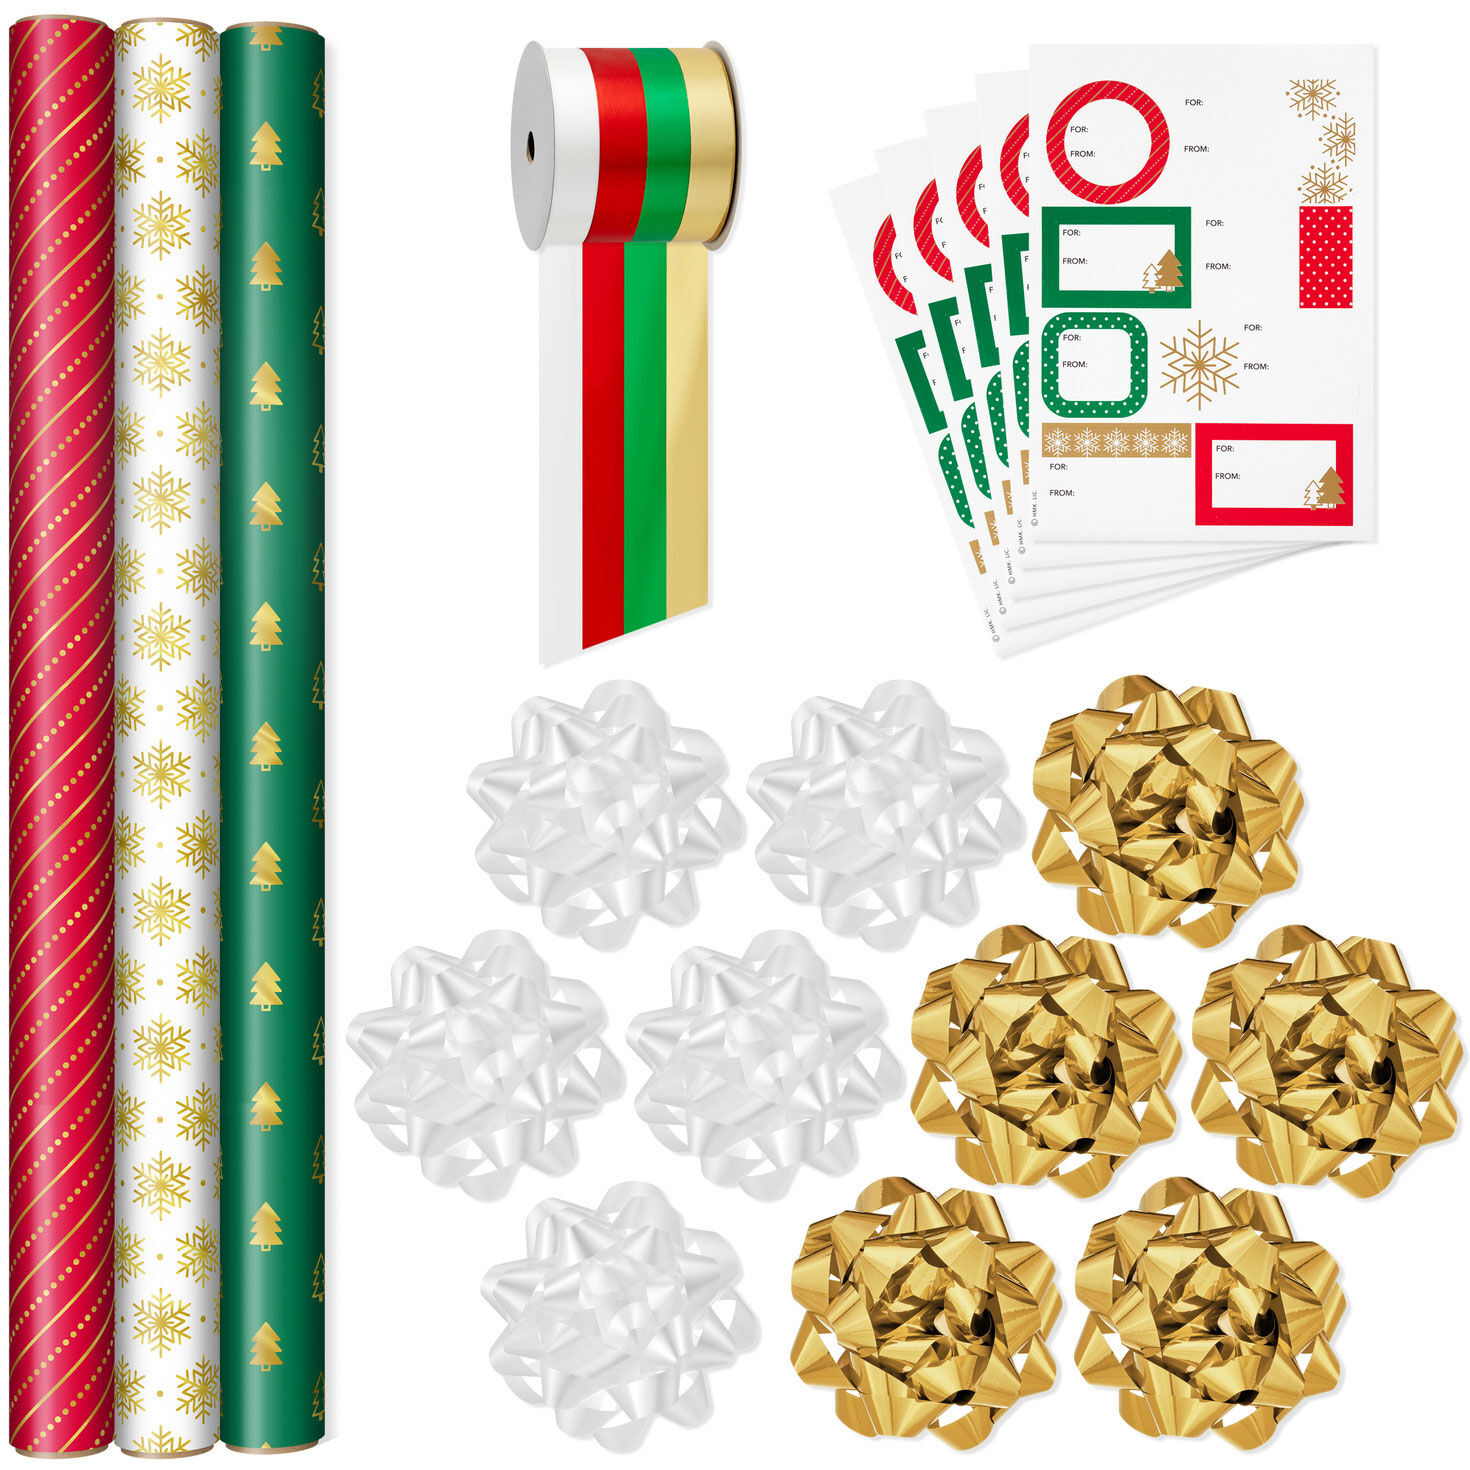 Hallmark Wrapping Paper Christmas Tis The Season Black 35 sq ft Roll  Holiday